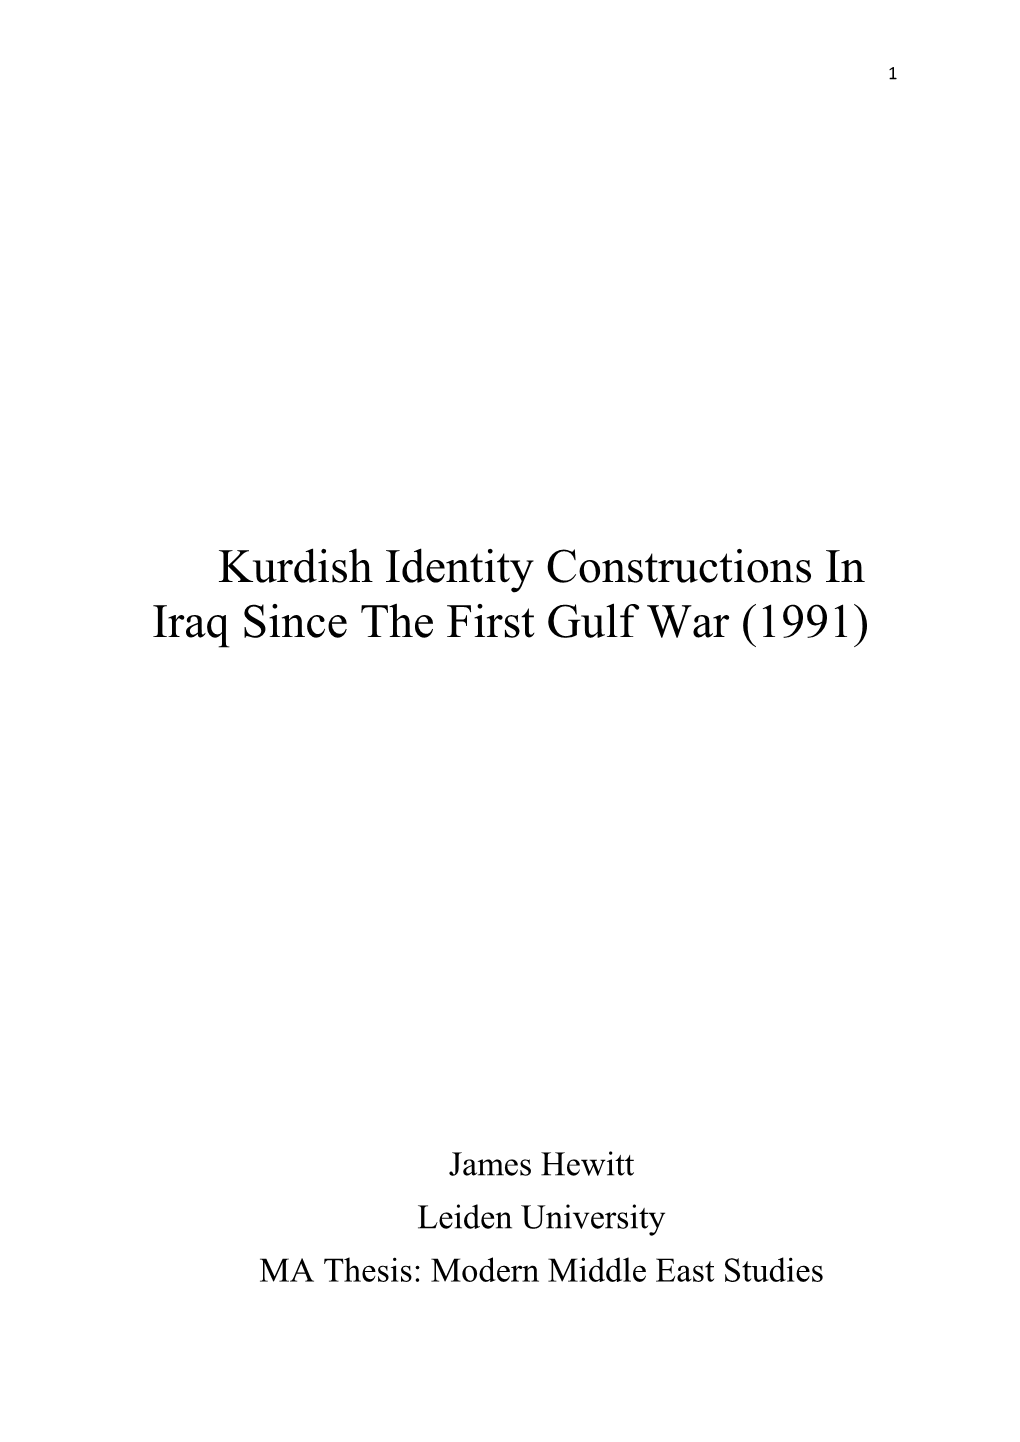 Kurdish Identity Constructions in Iraq Since the First Gulf War (1991)